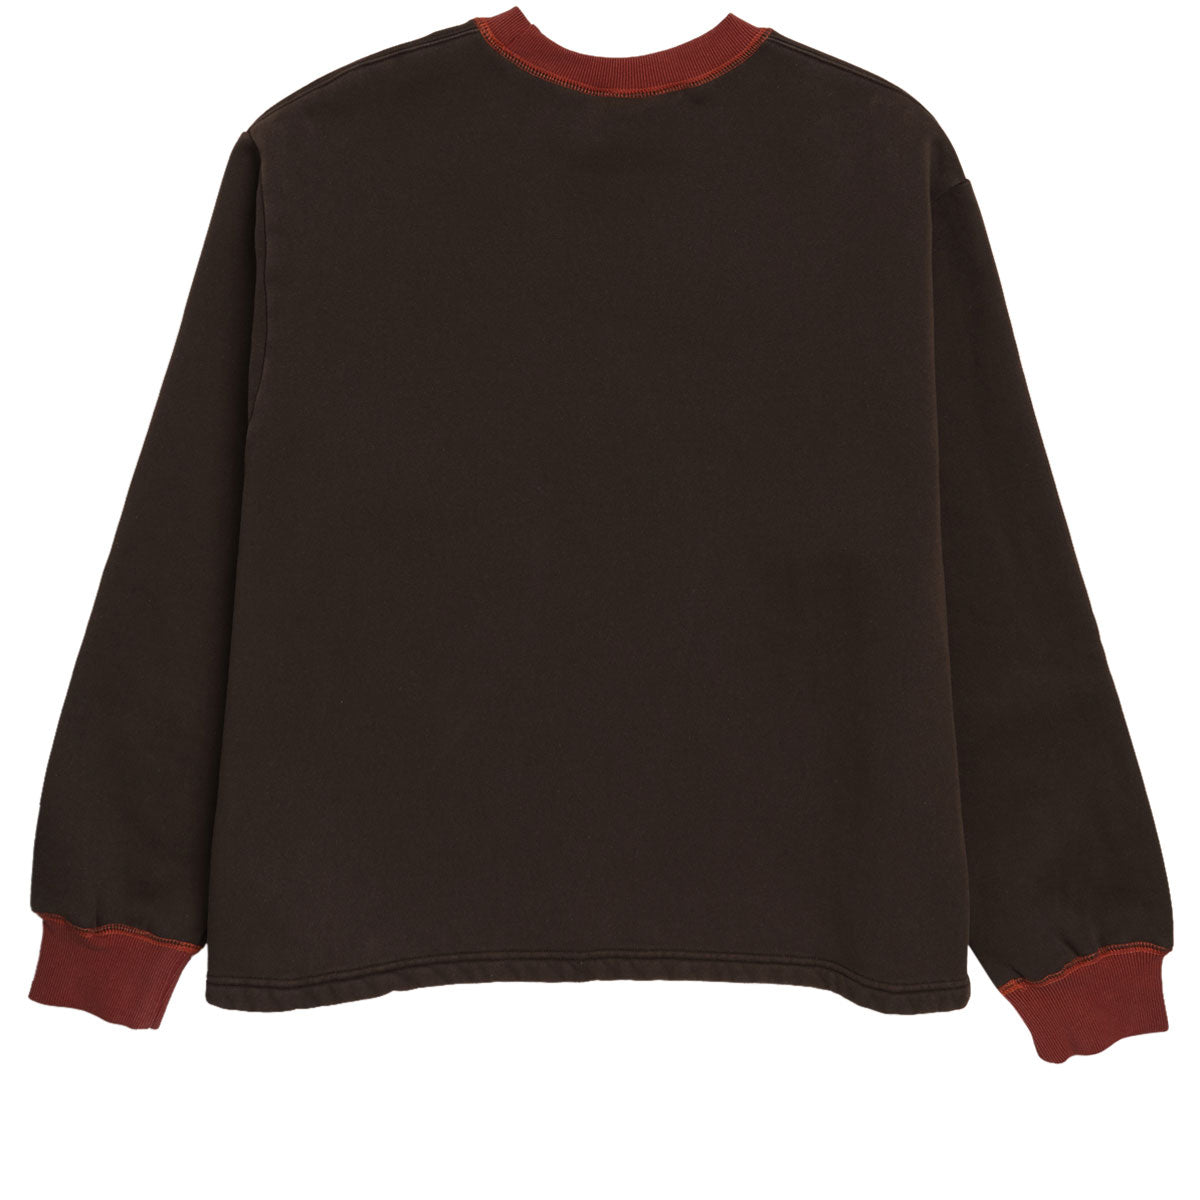 WKND Pigment Jumper Sweatshirt - Brown image 2